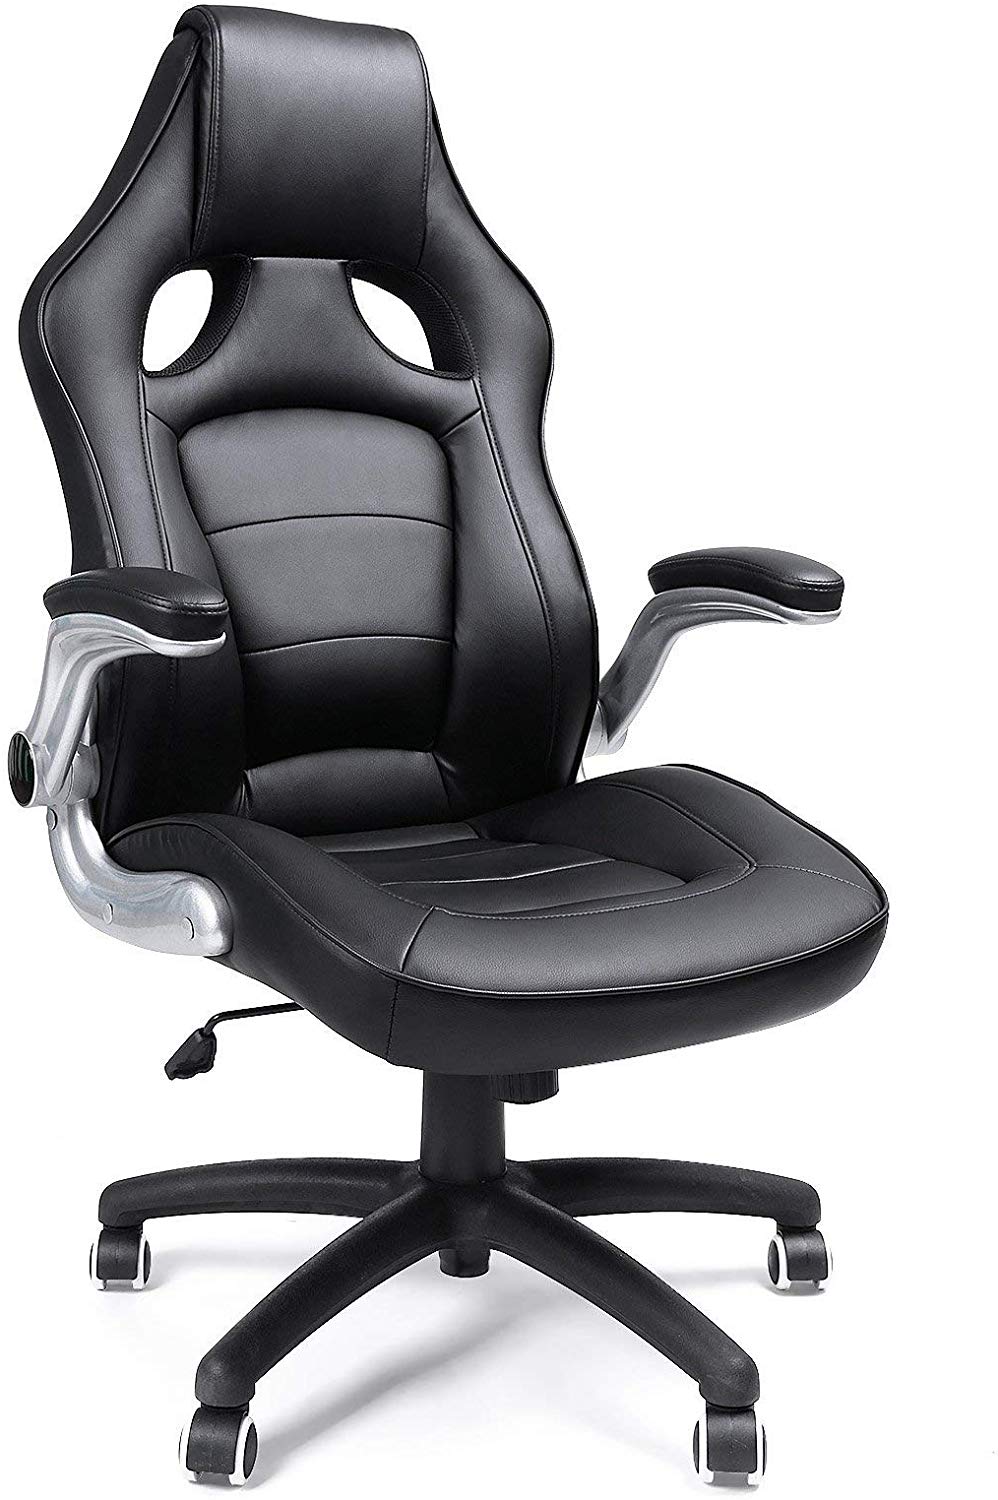 Kancelárska stolička Racing III Black, pre PC stoly, racing design, nosnosť 150kg